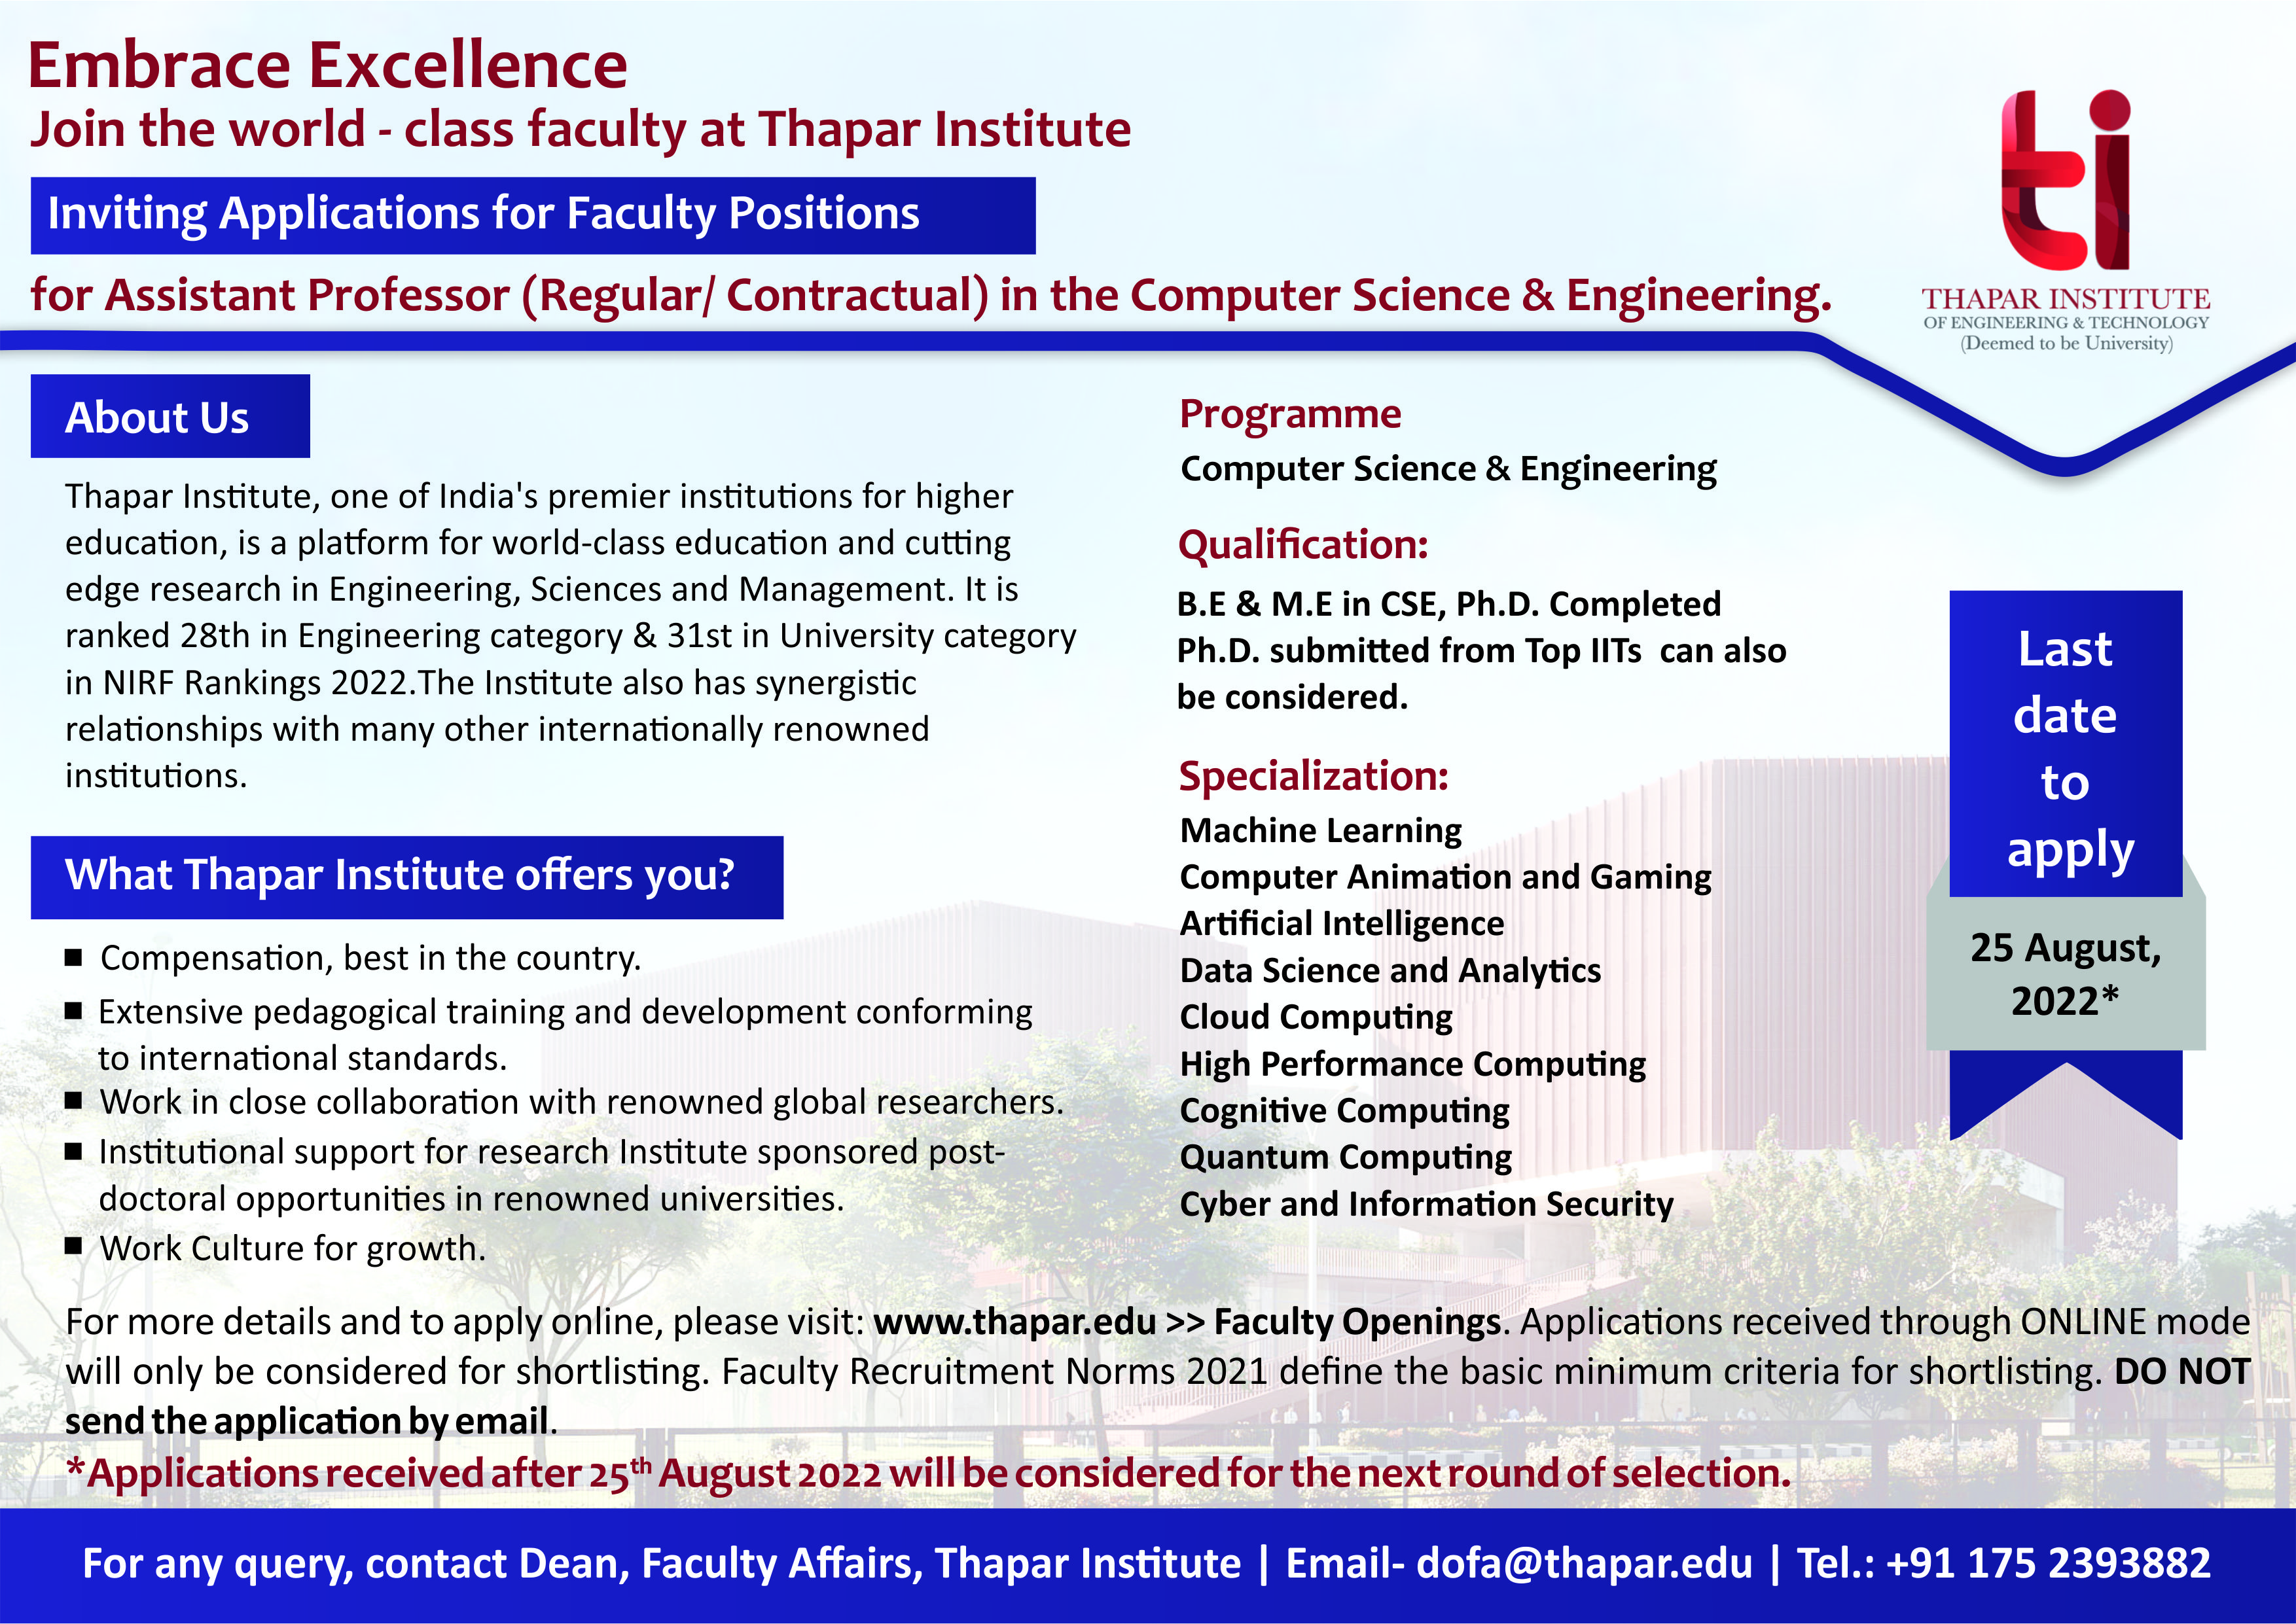 Regular Faculty Positions at Thapar Institute (TIET), Patiala, India